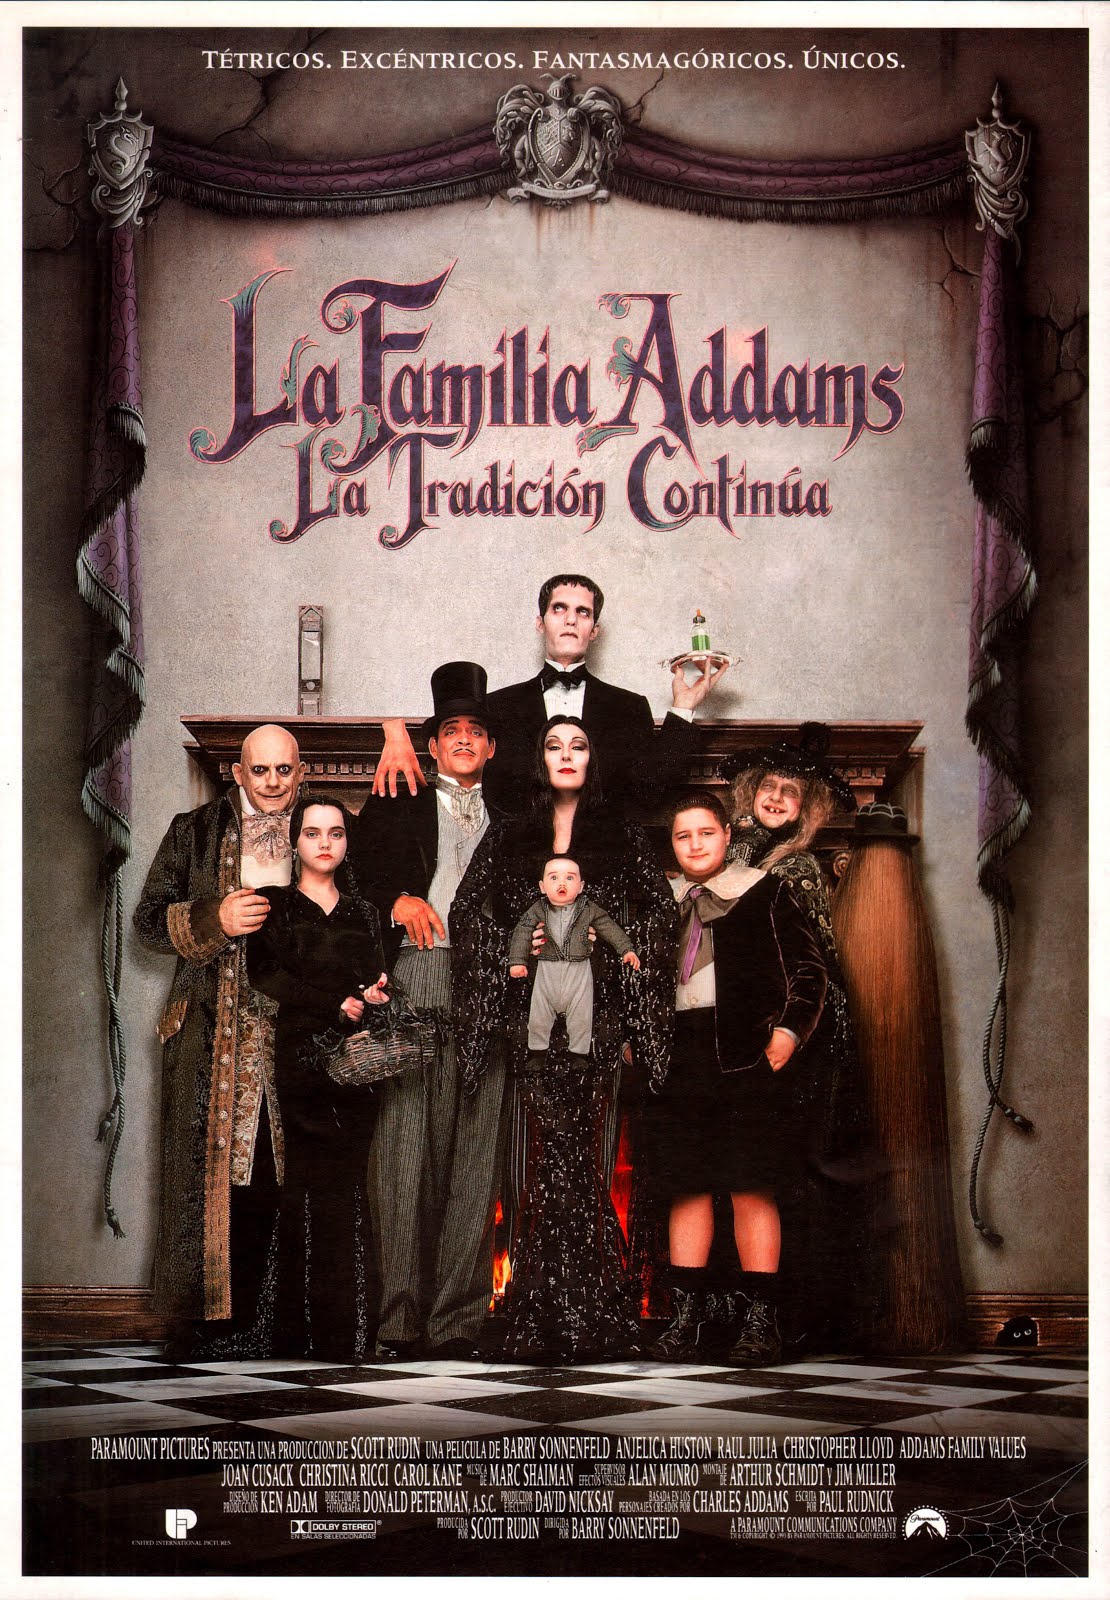 Les valeurs de la famille Addams (1993) Barry Sonnenfeld - Addams family values